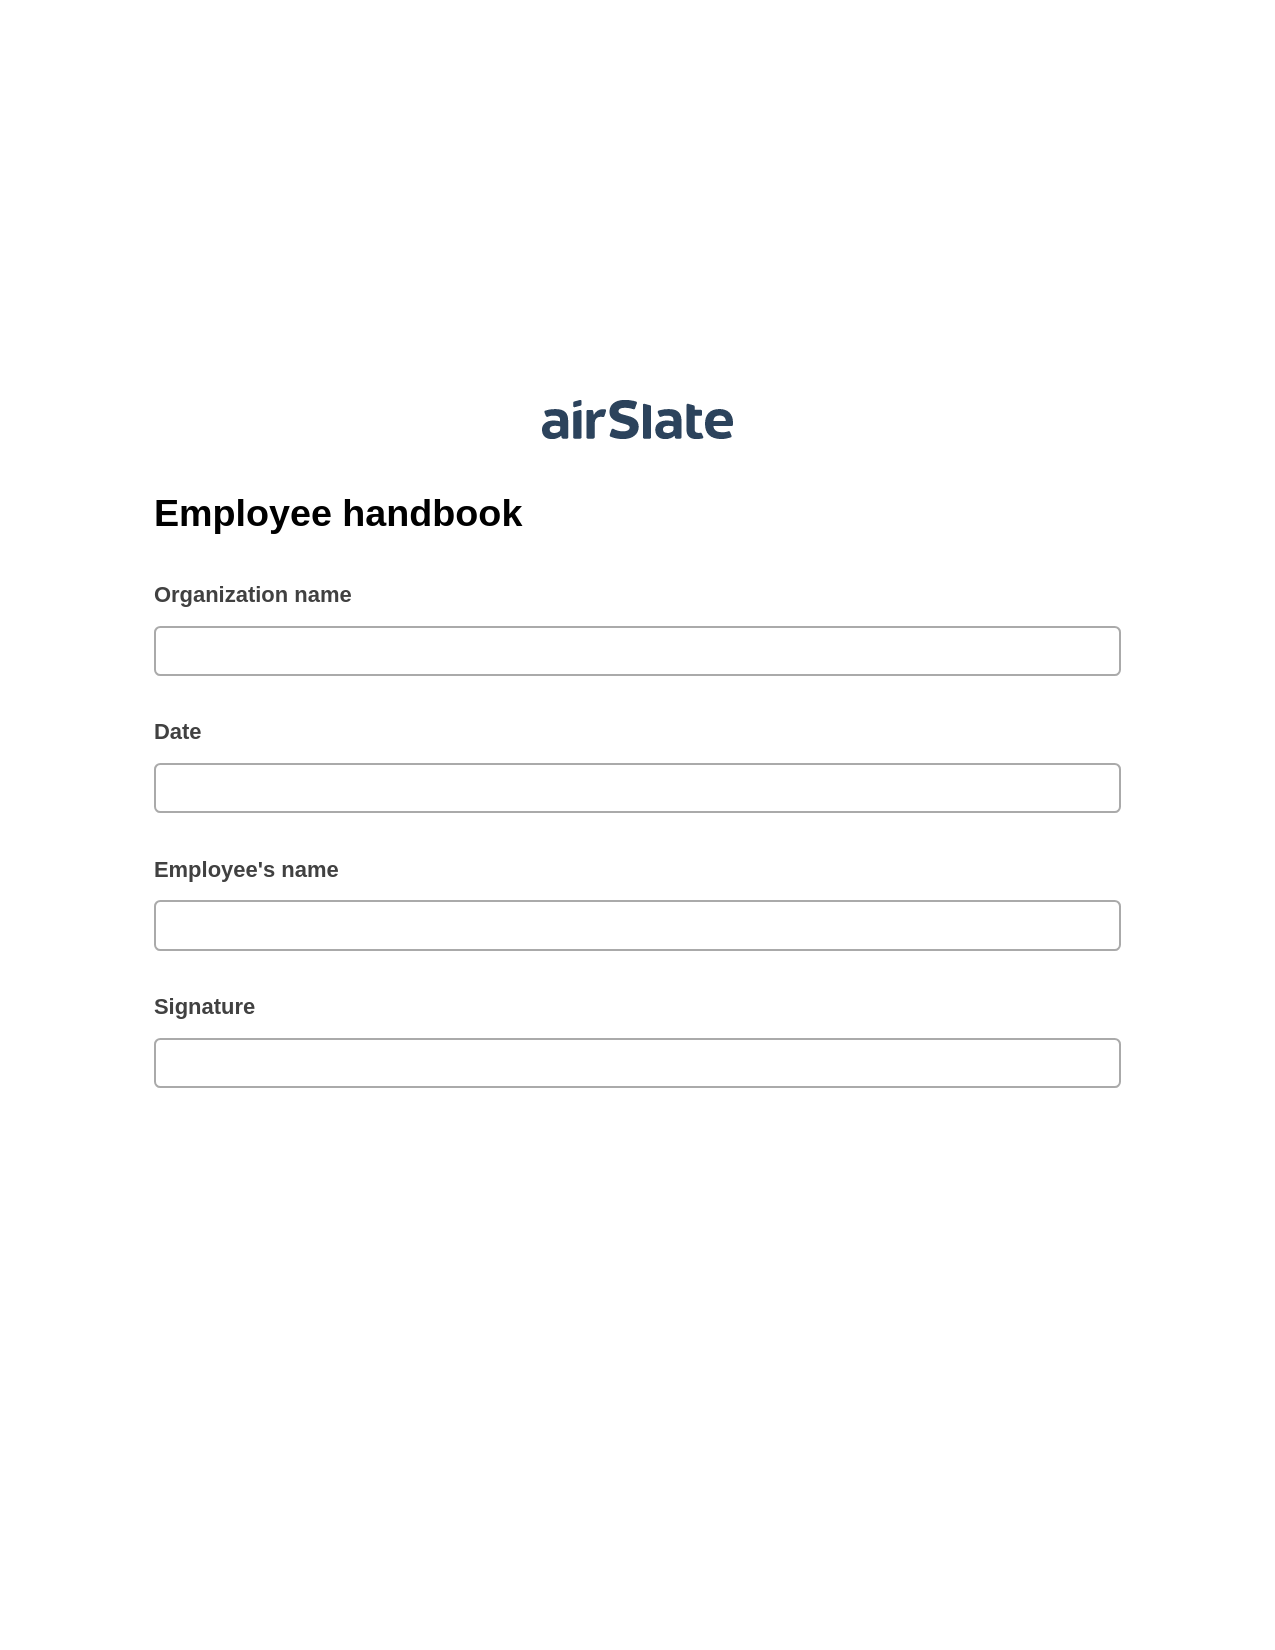 Employee handbook Pre-fill from Excel Spreadsheet Bot, Send a Slate to Salesforce Contact Bot, Dropbox Bot